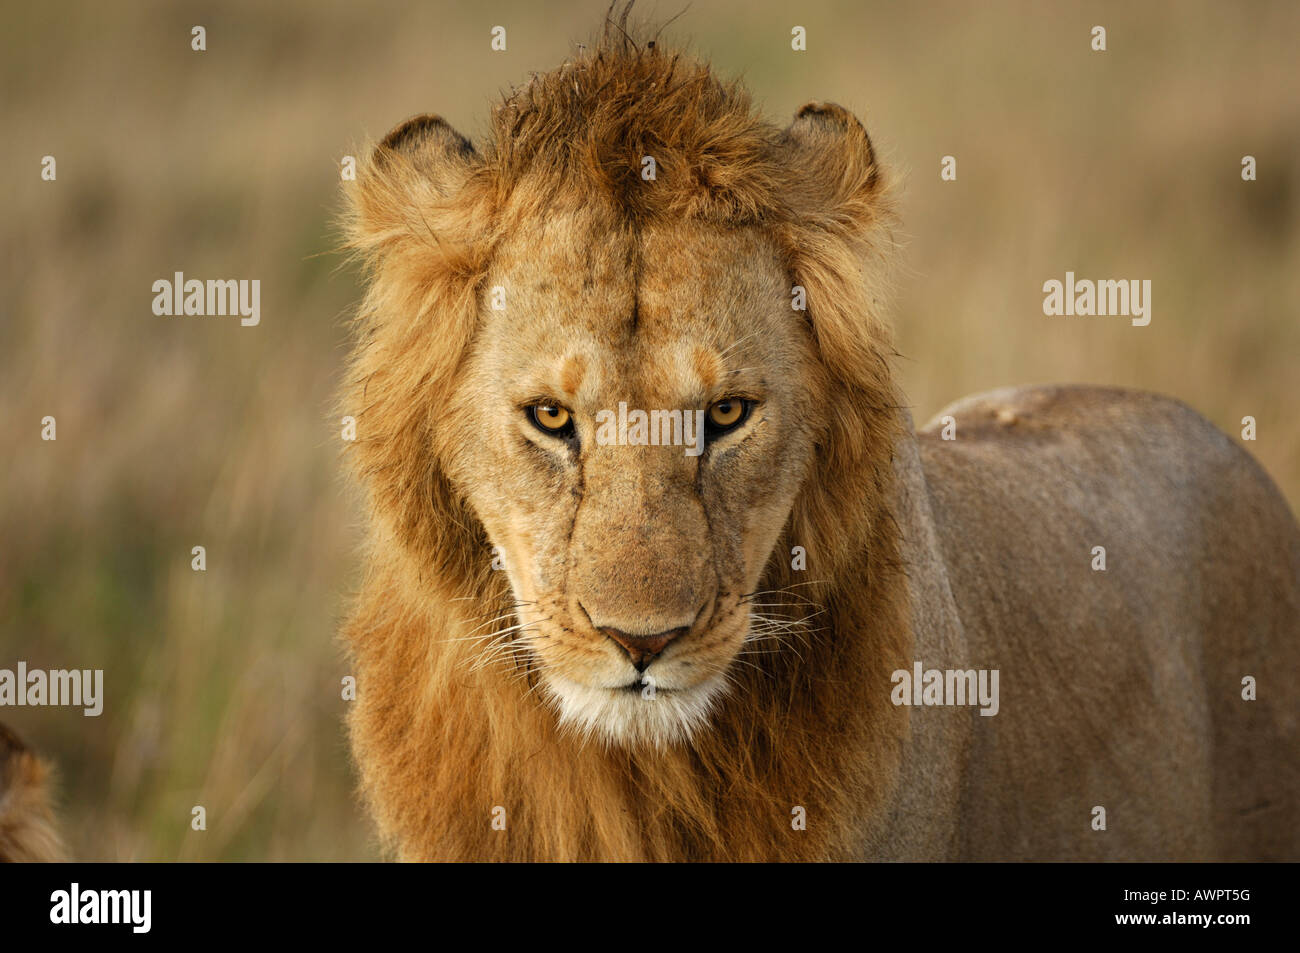 Lion (Panthera leo), portrait, Masai Mara, Kenya, Africa Stock Photo